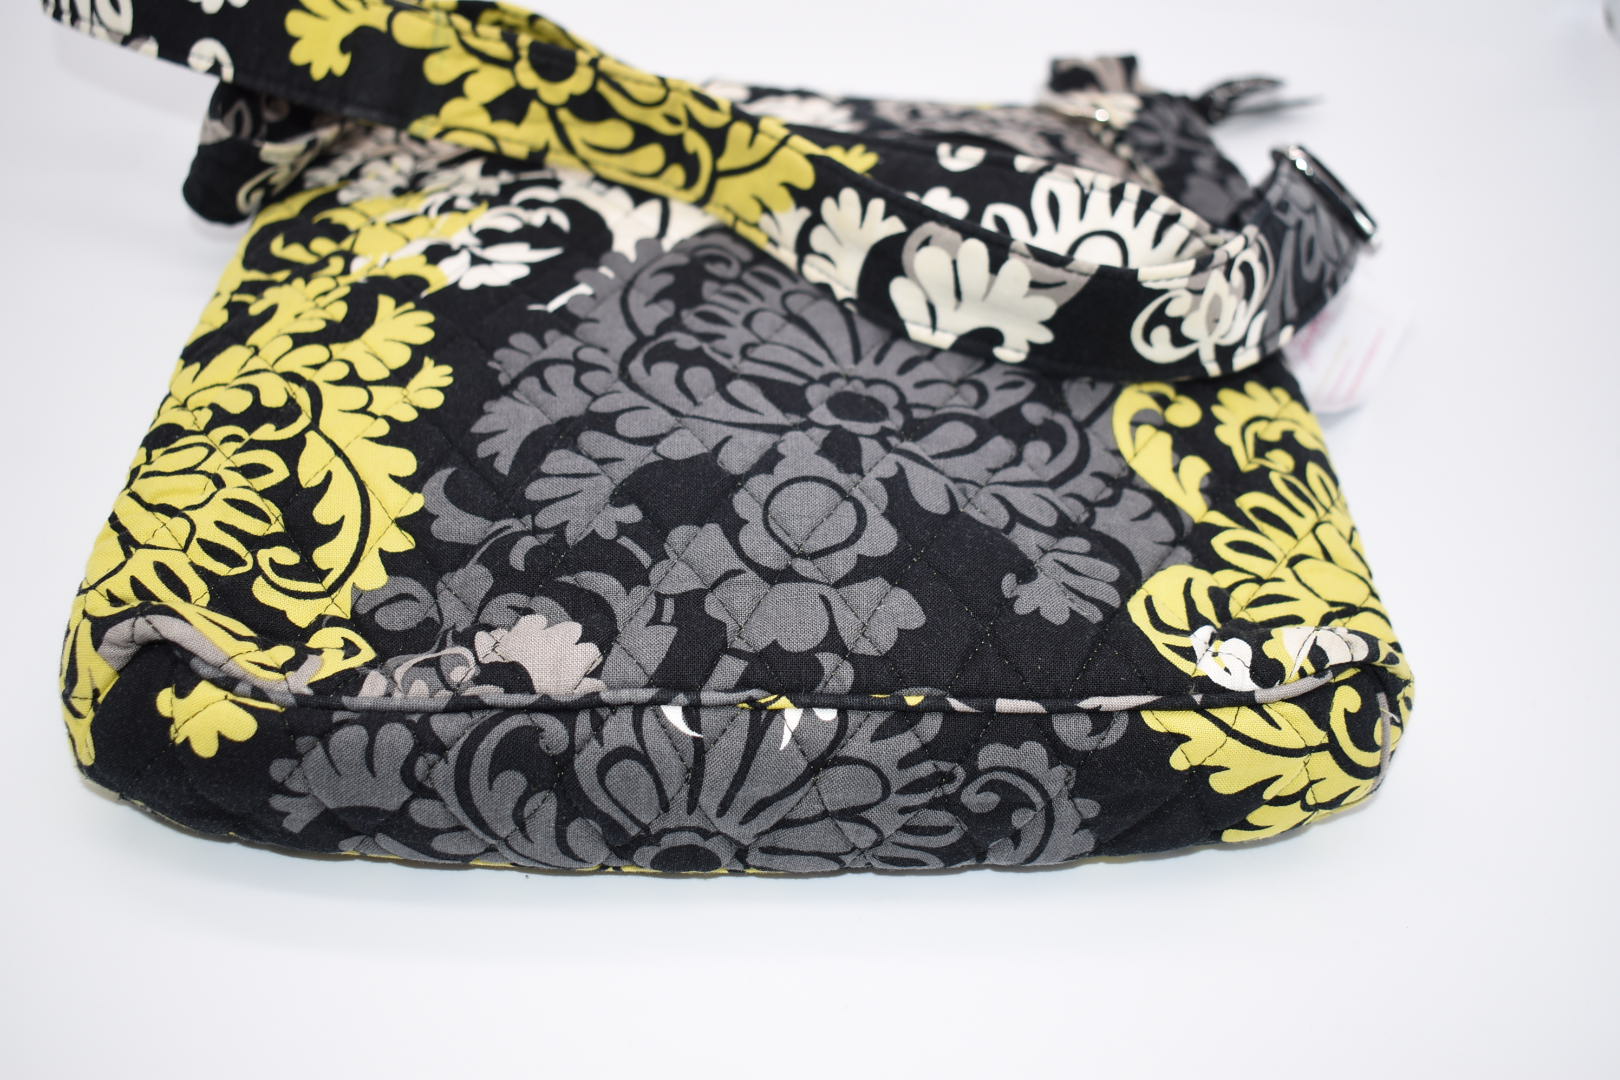 Vera Bradley Hipster Crossbody Bag in Baroque Pattern – Pink Lemon  Standard